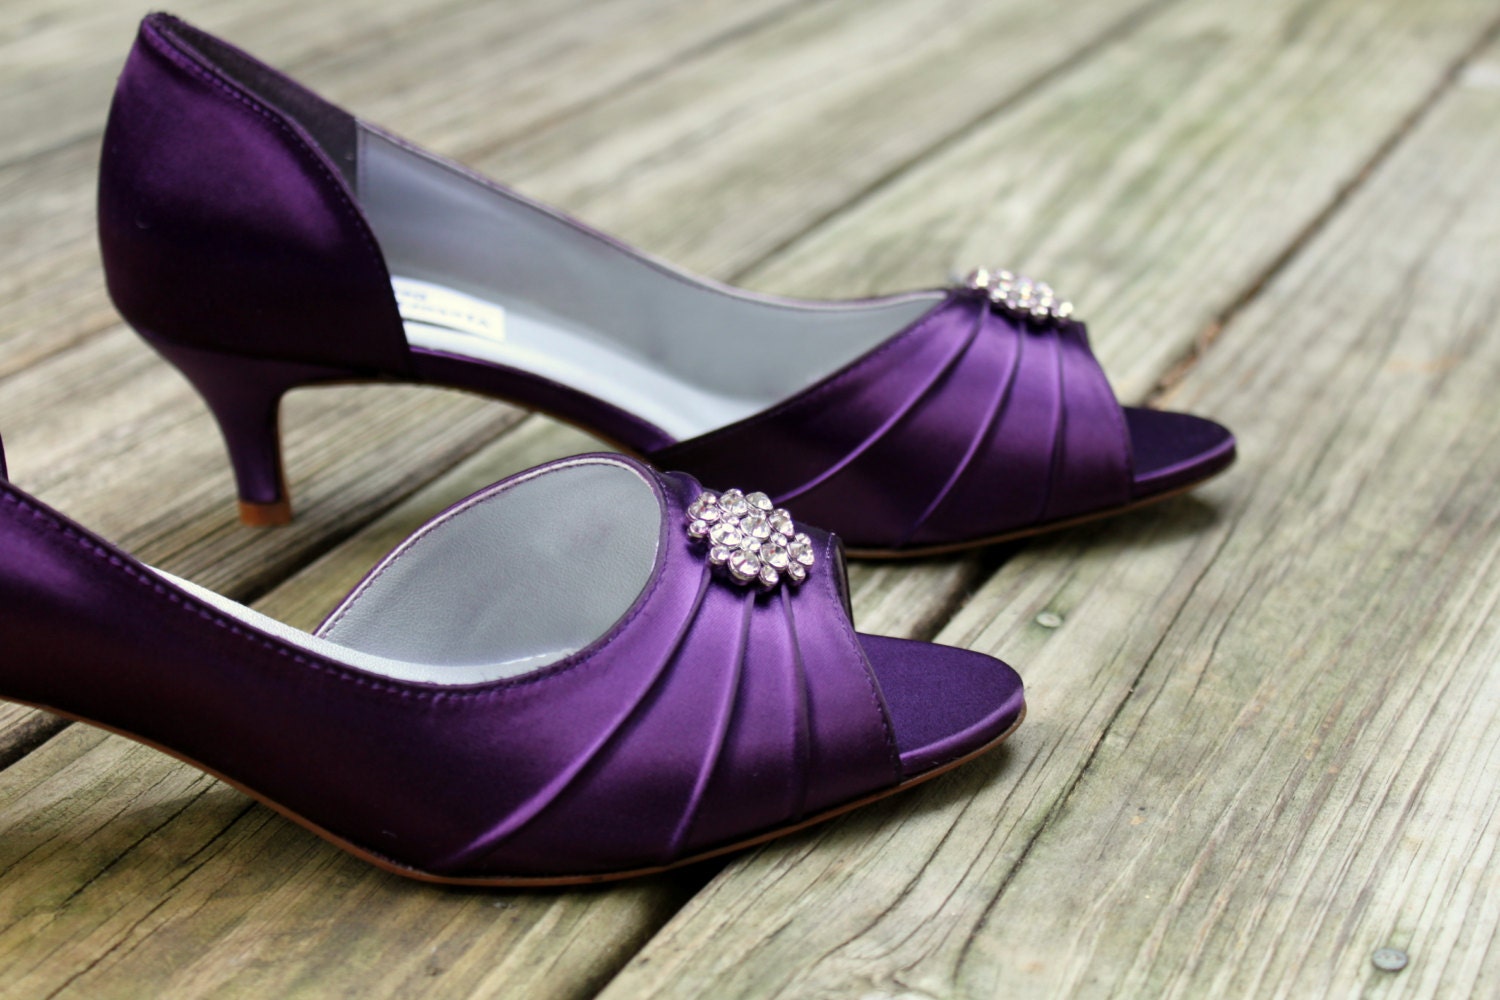 Buy > eggplant colored heels > in stock